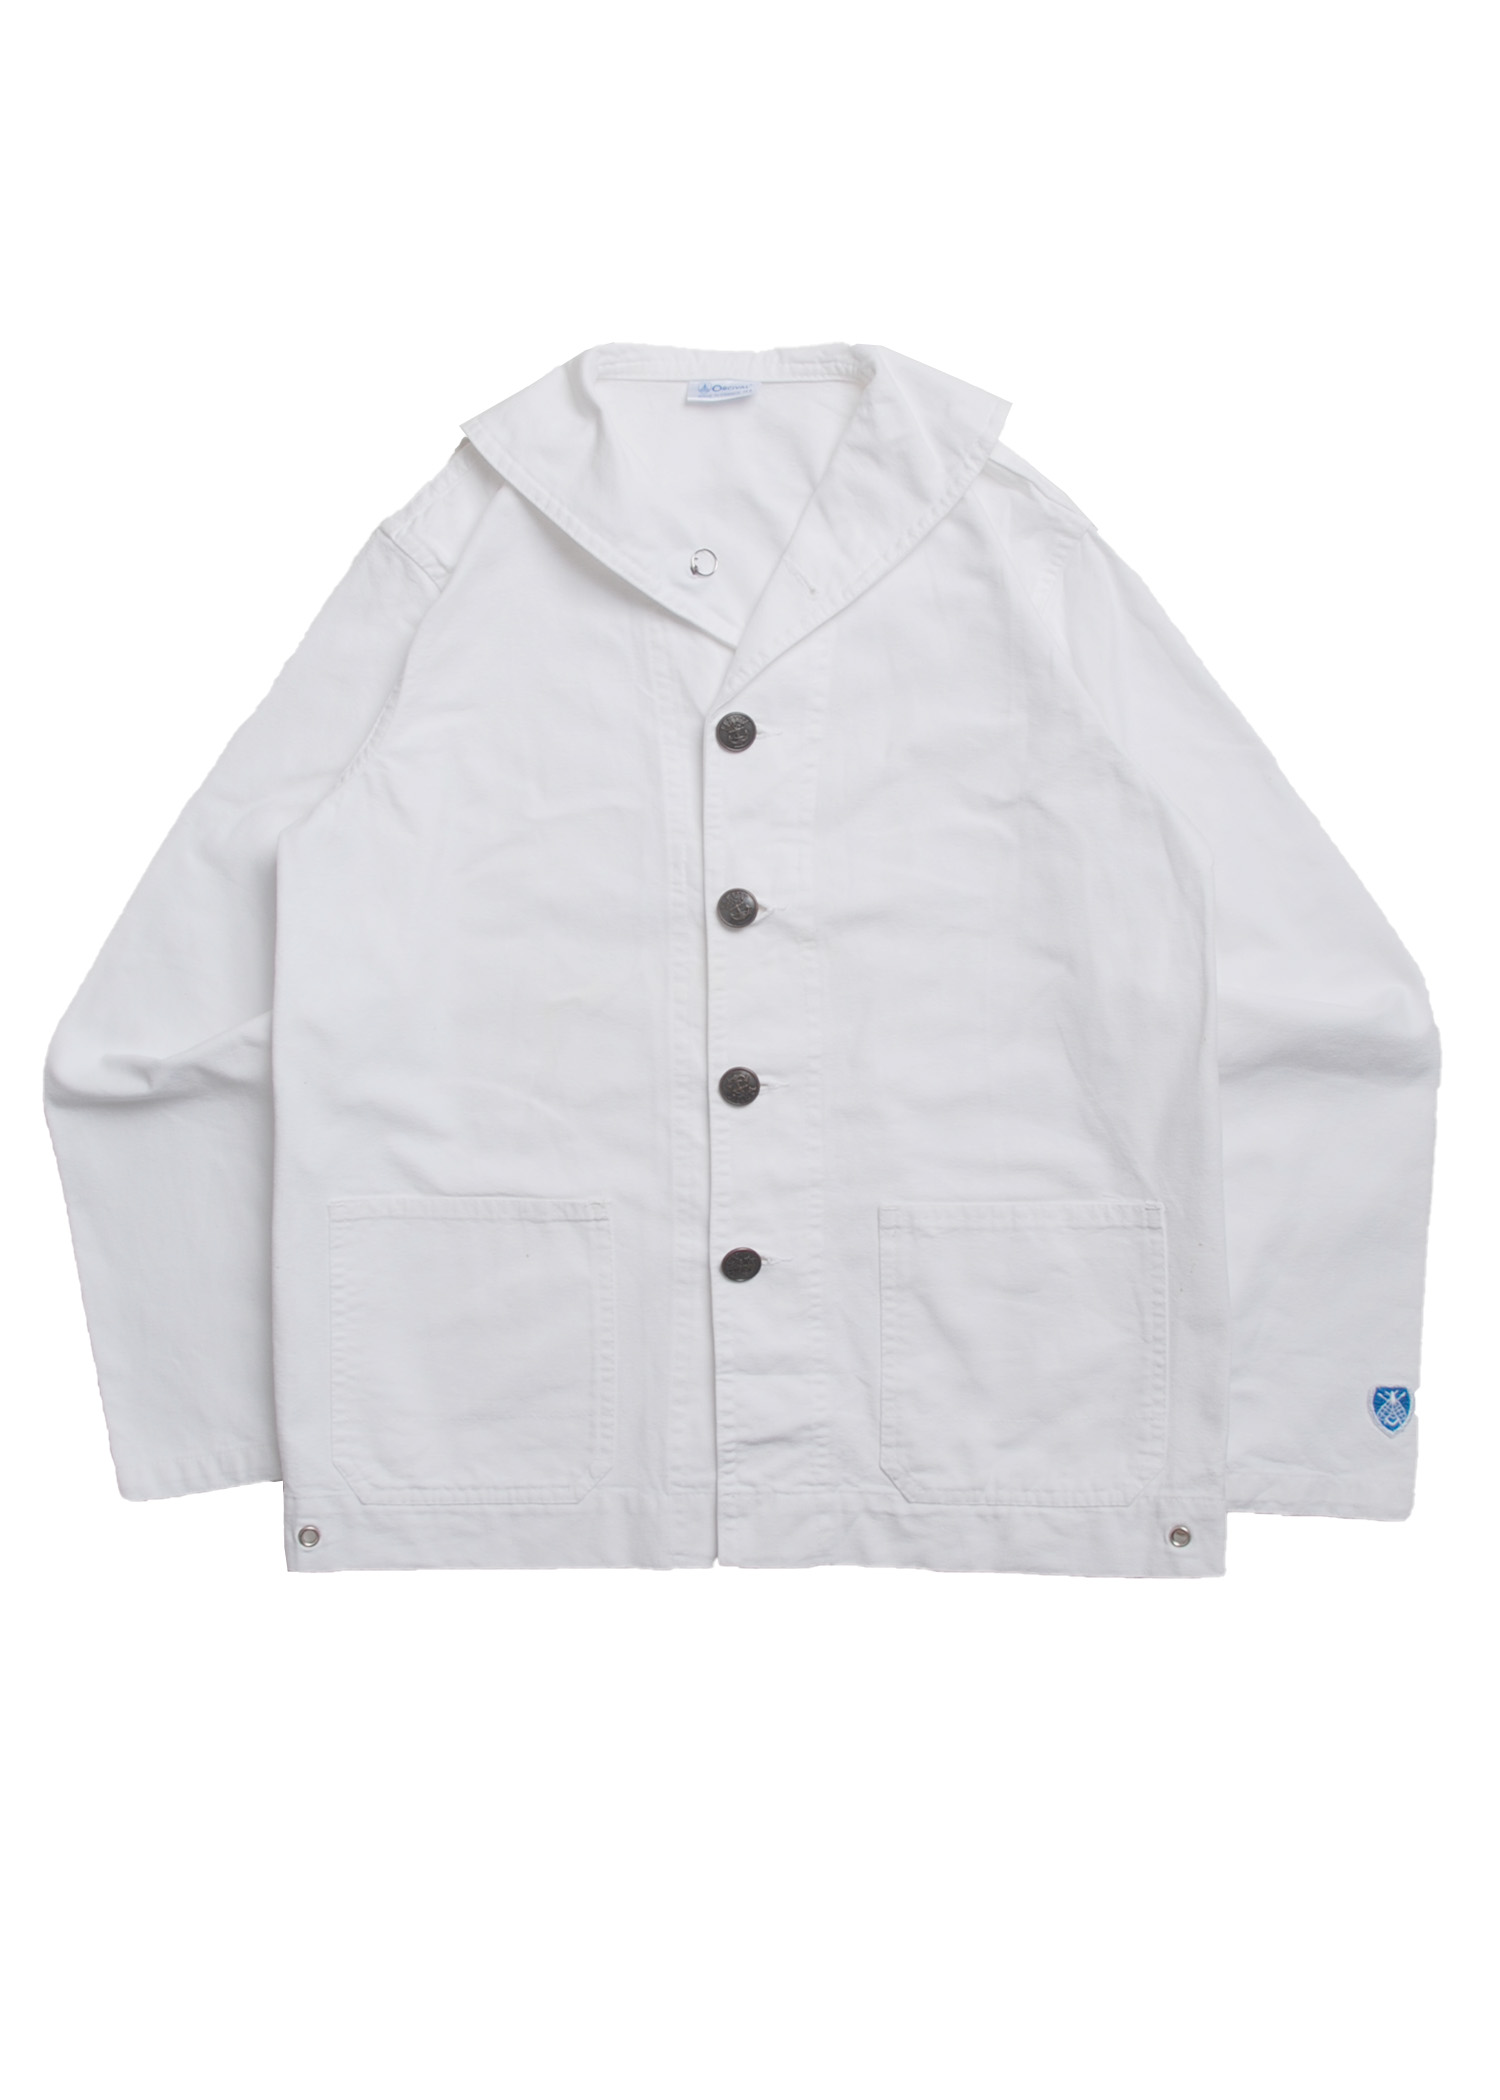 ORCHIVAL white sailor jacket